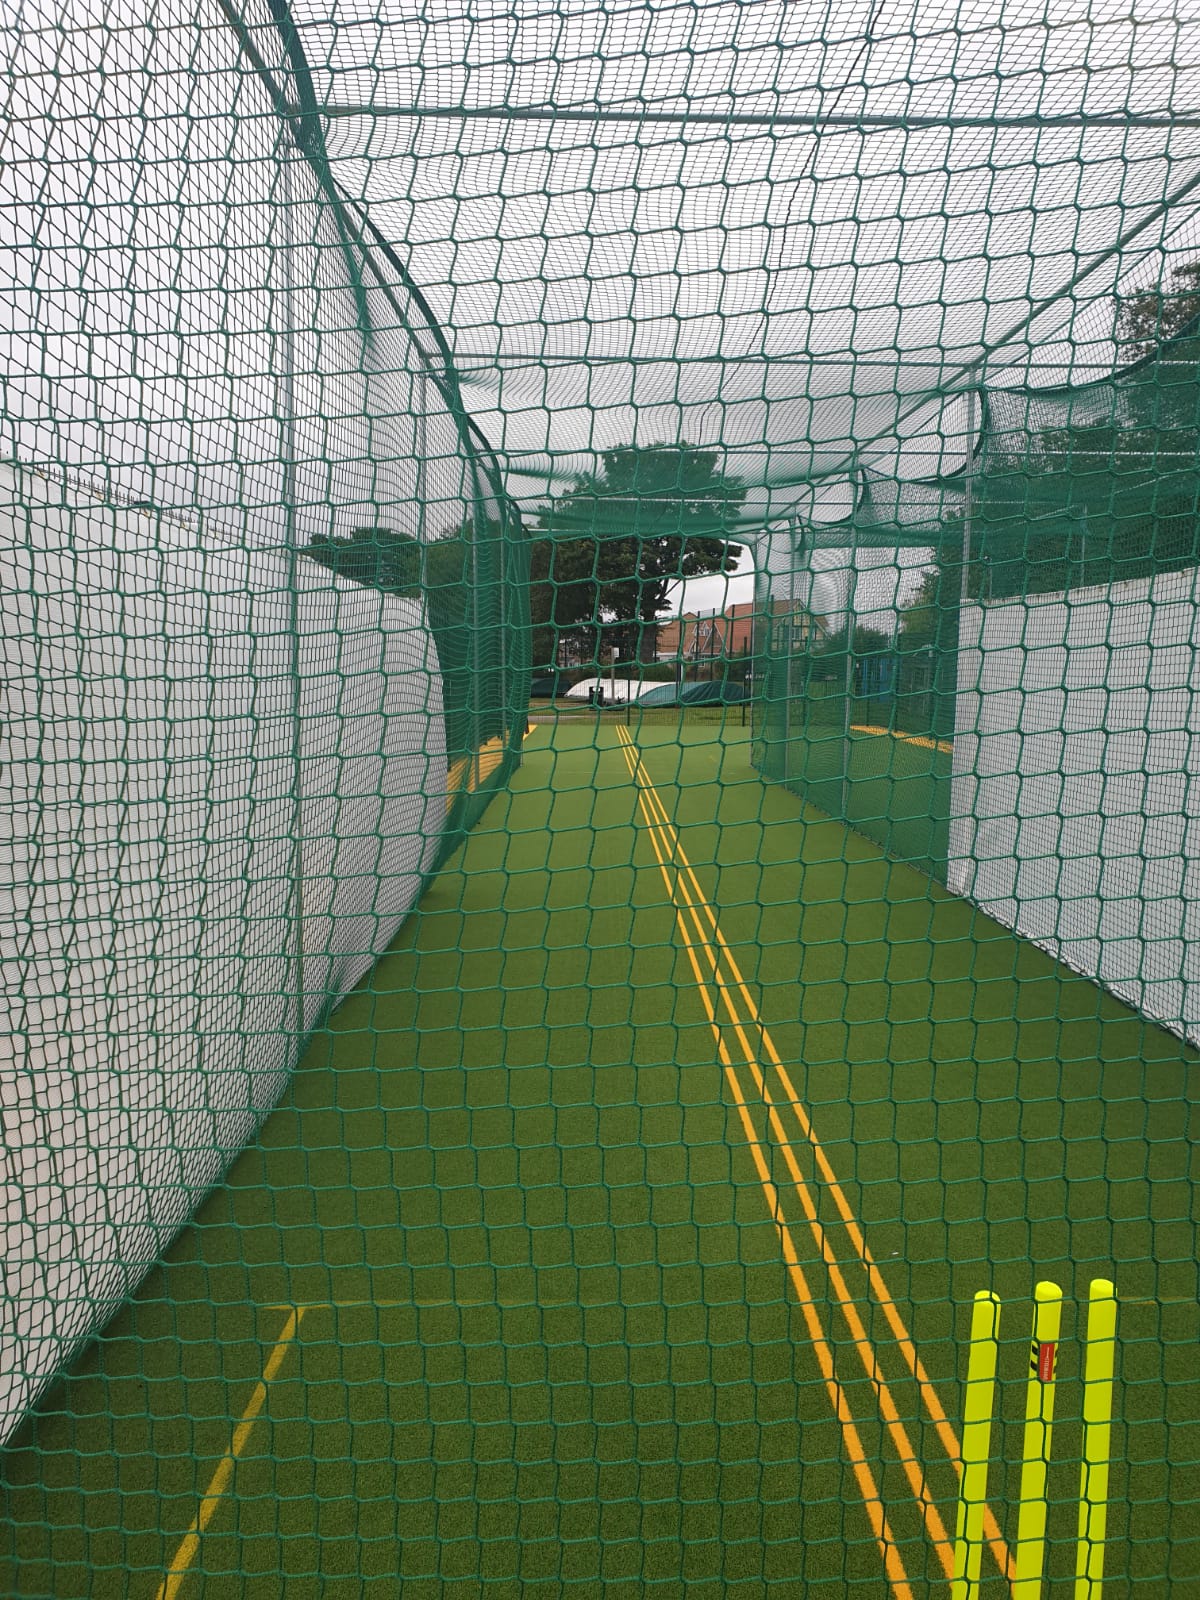 Bates Cottages Cricket Club nets